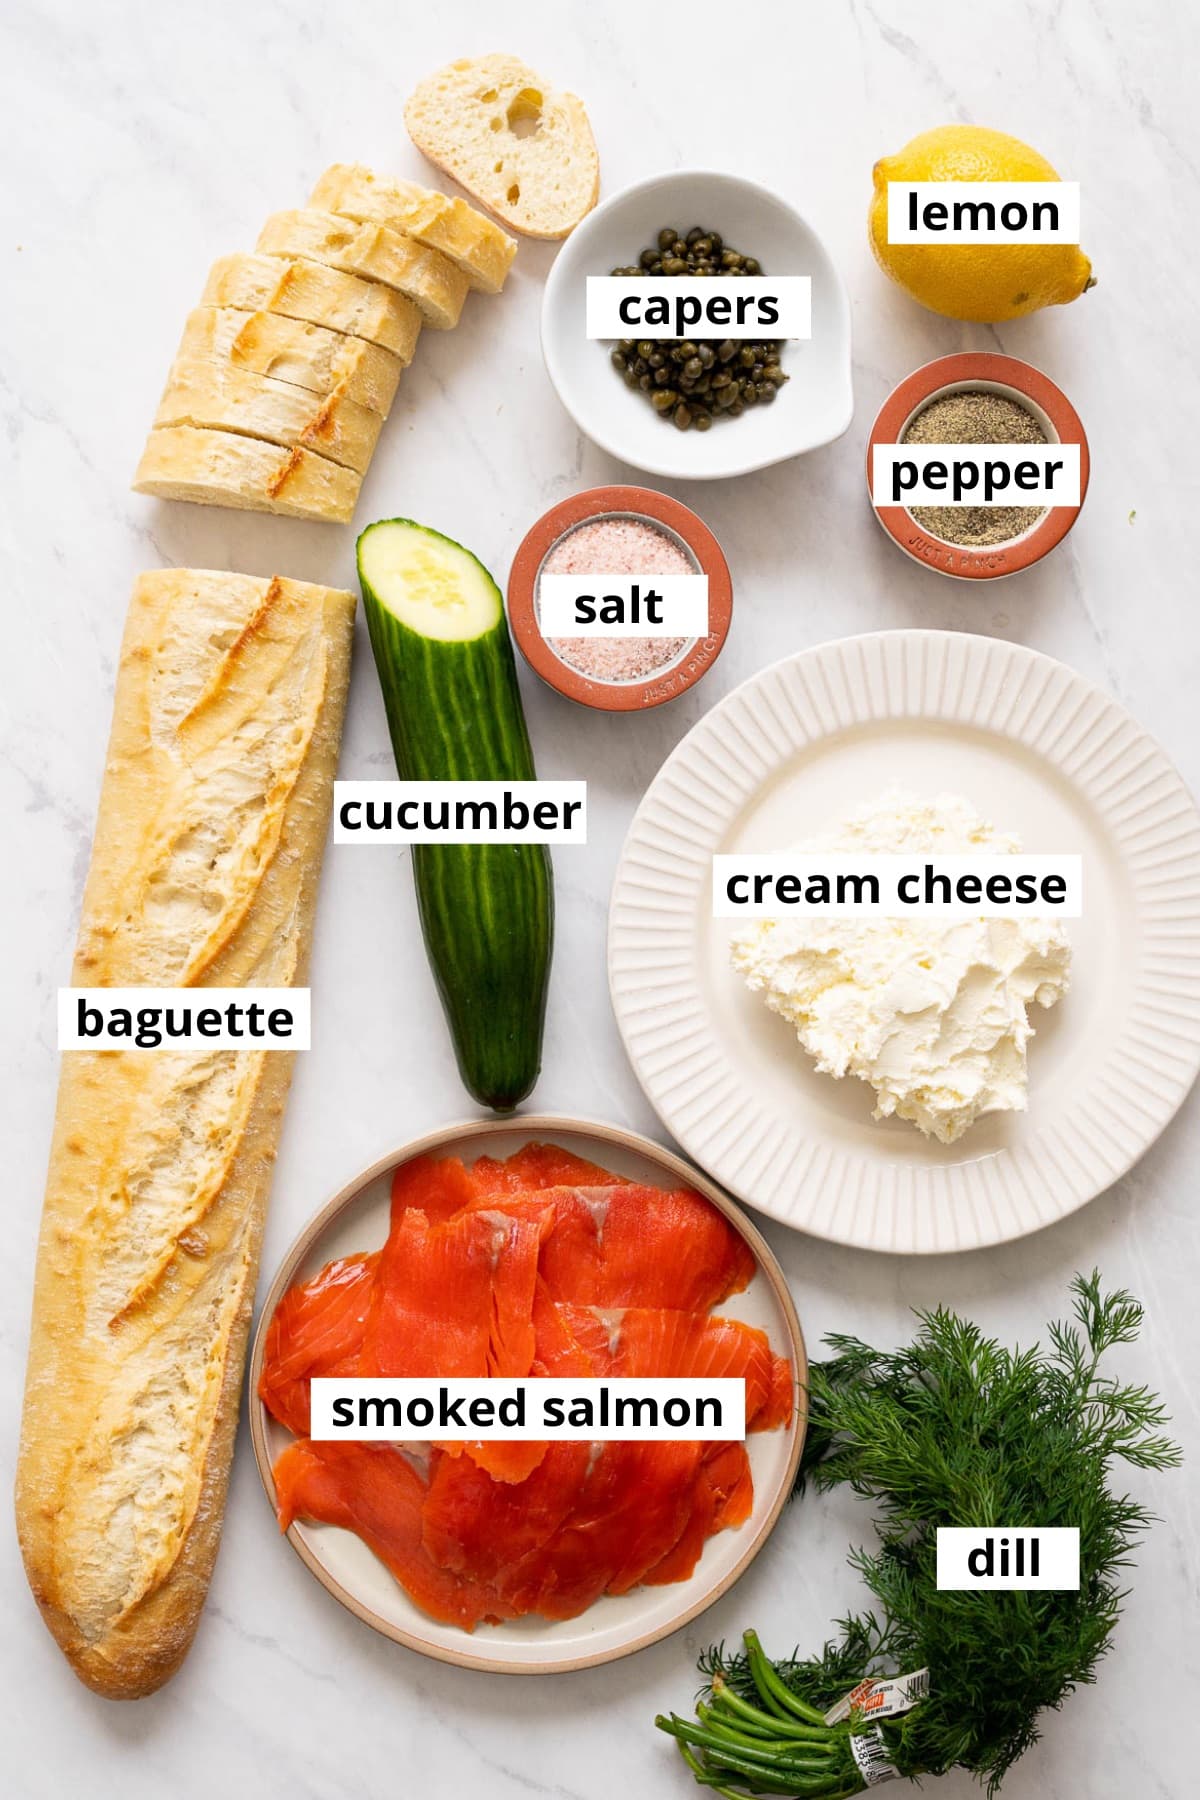 Baguette, cucumber, smoked salmon, cream cheese, salt, pepper, lemon, capers, dill.